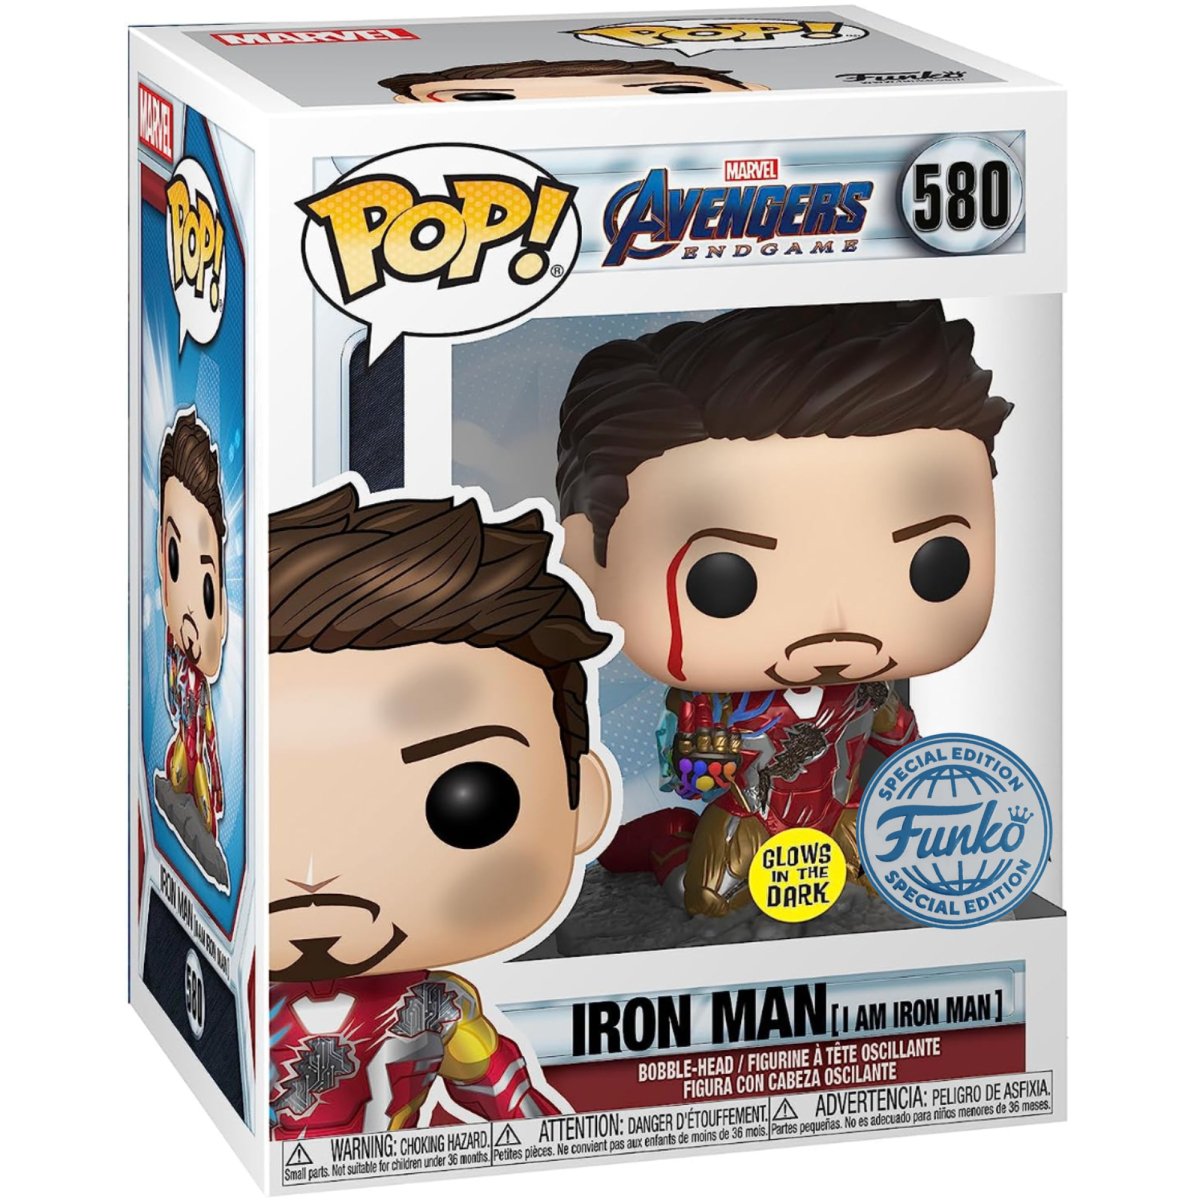 Avengers Endgame - Iron Man [I Am Iron Man] (GITD Special Edition) #580 - Funko Pop! Vinyl Marvel - Persona Toys